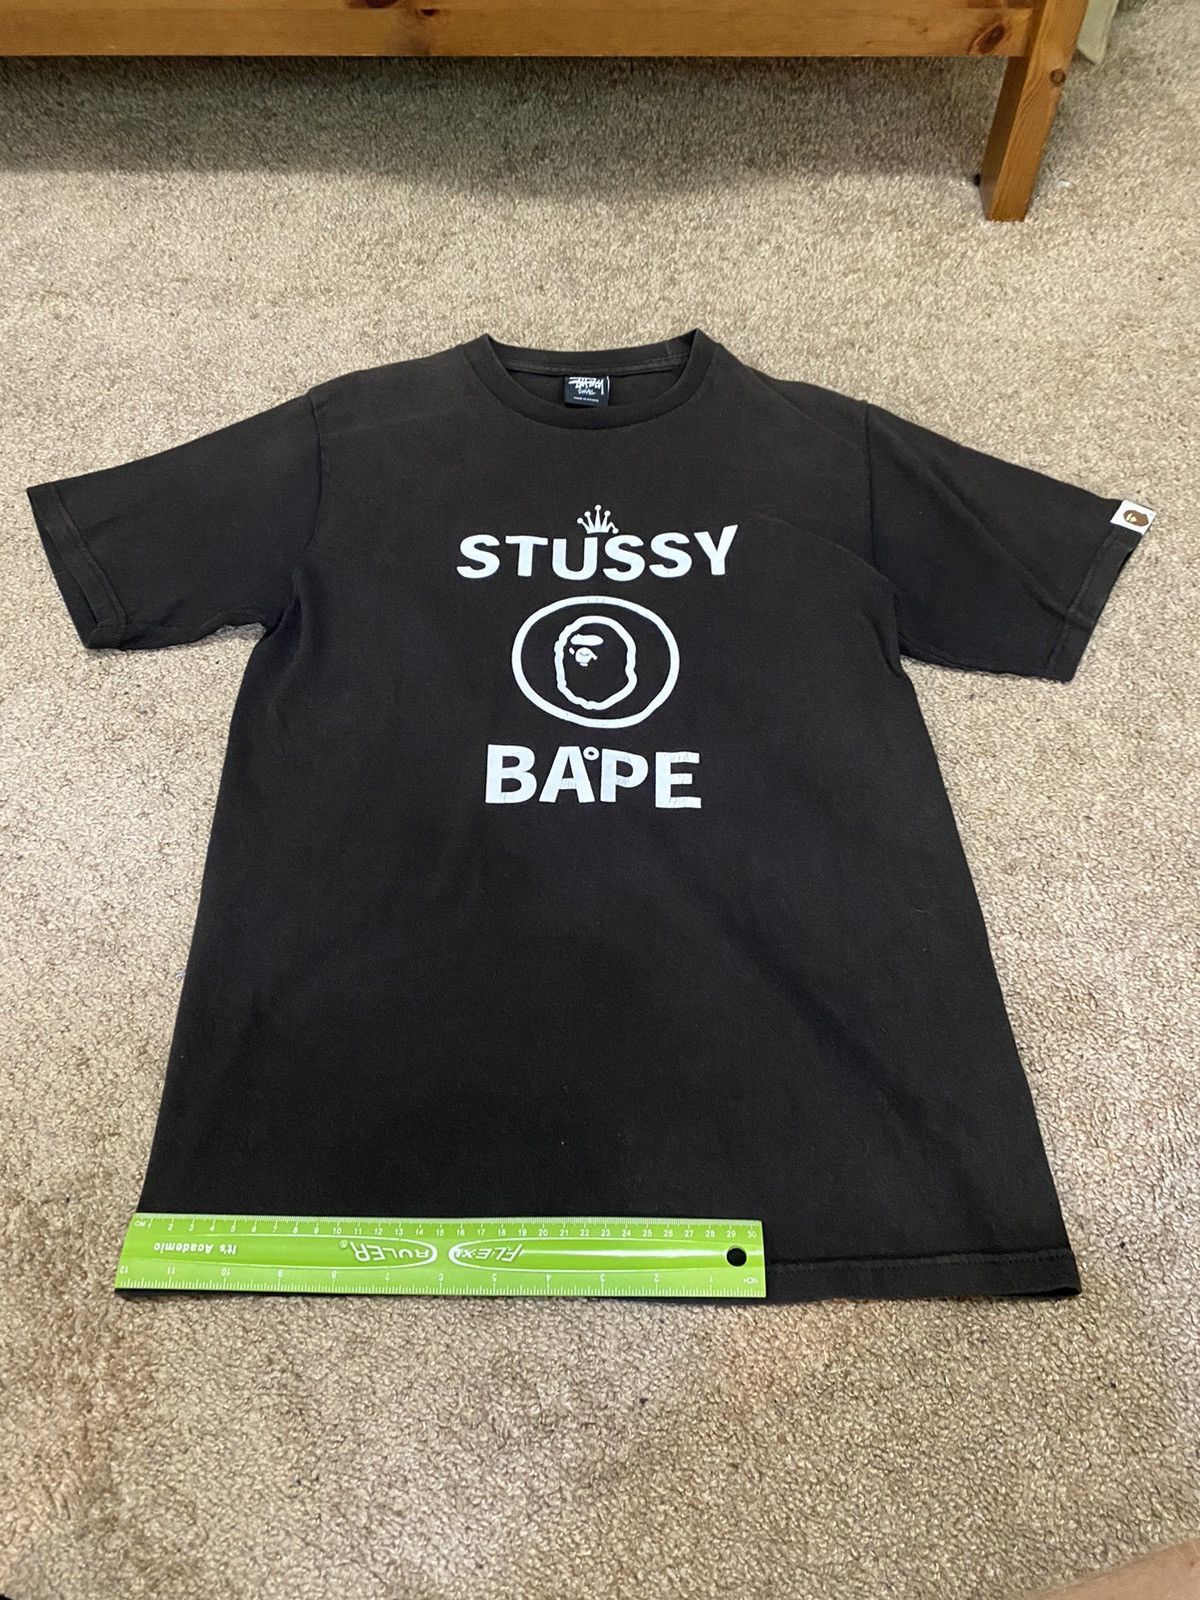 Bape Stussy X Bape First Collab T Shirt Men sz S Vintage 2010 Size US S / EU 44-46 / 1 - 5 Thumbnail